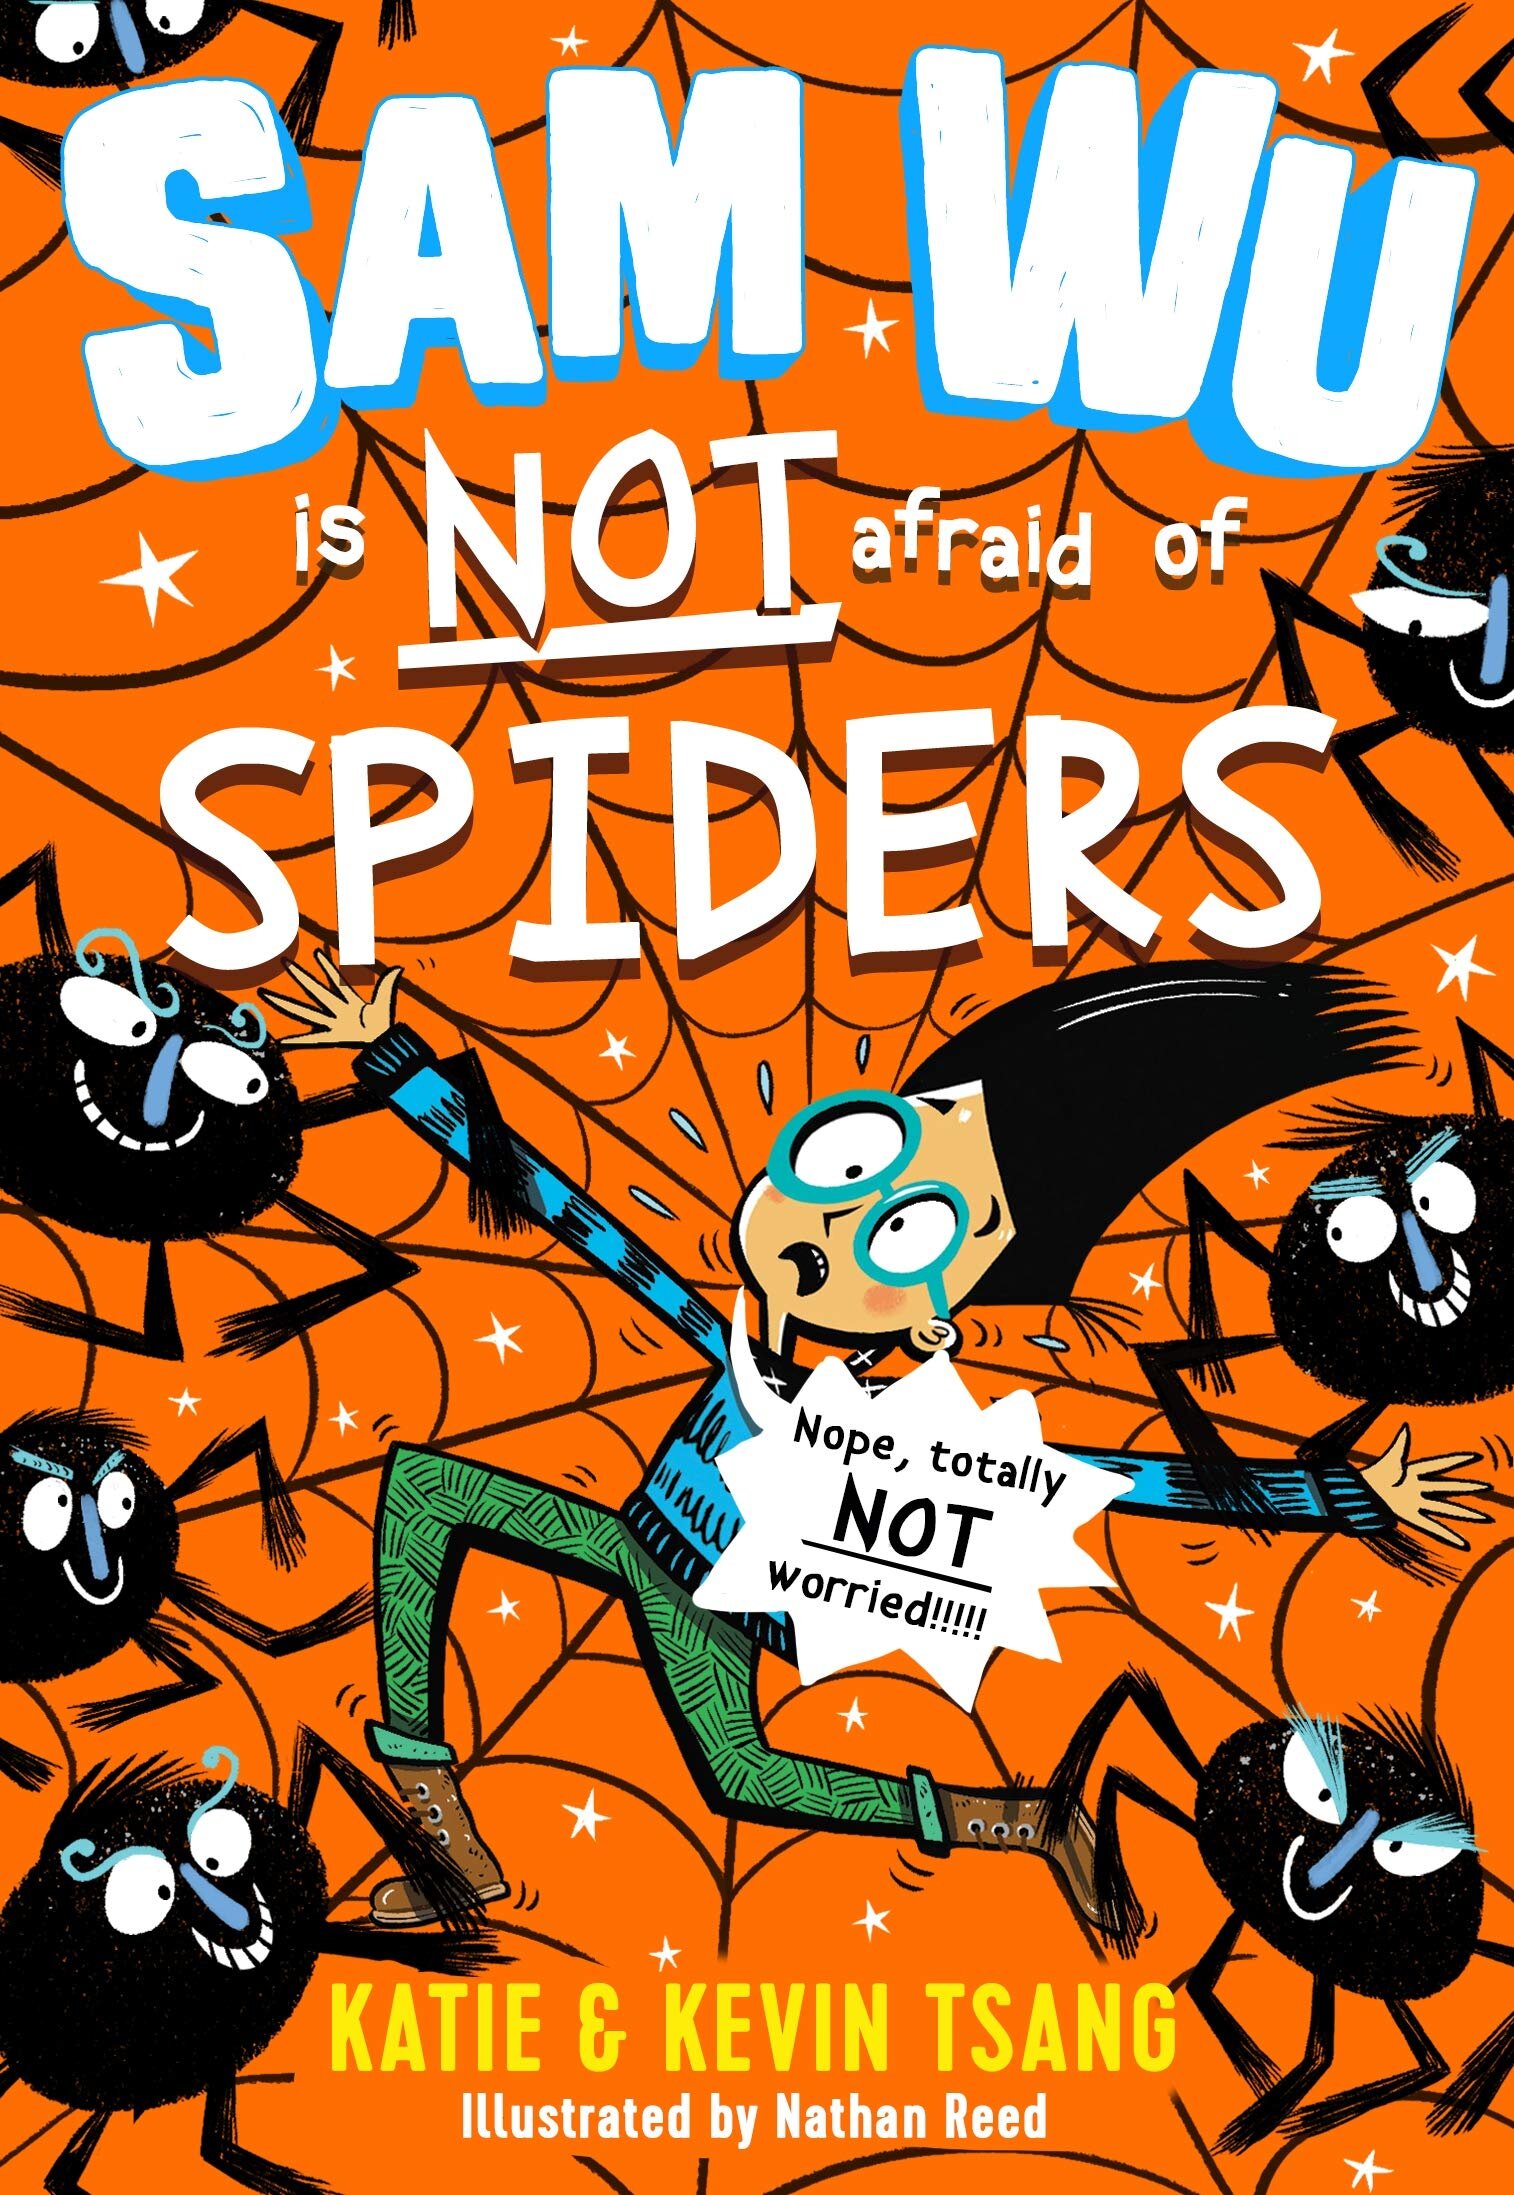 Sam Wu Is Not Afraid of Spiders